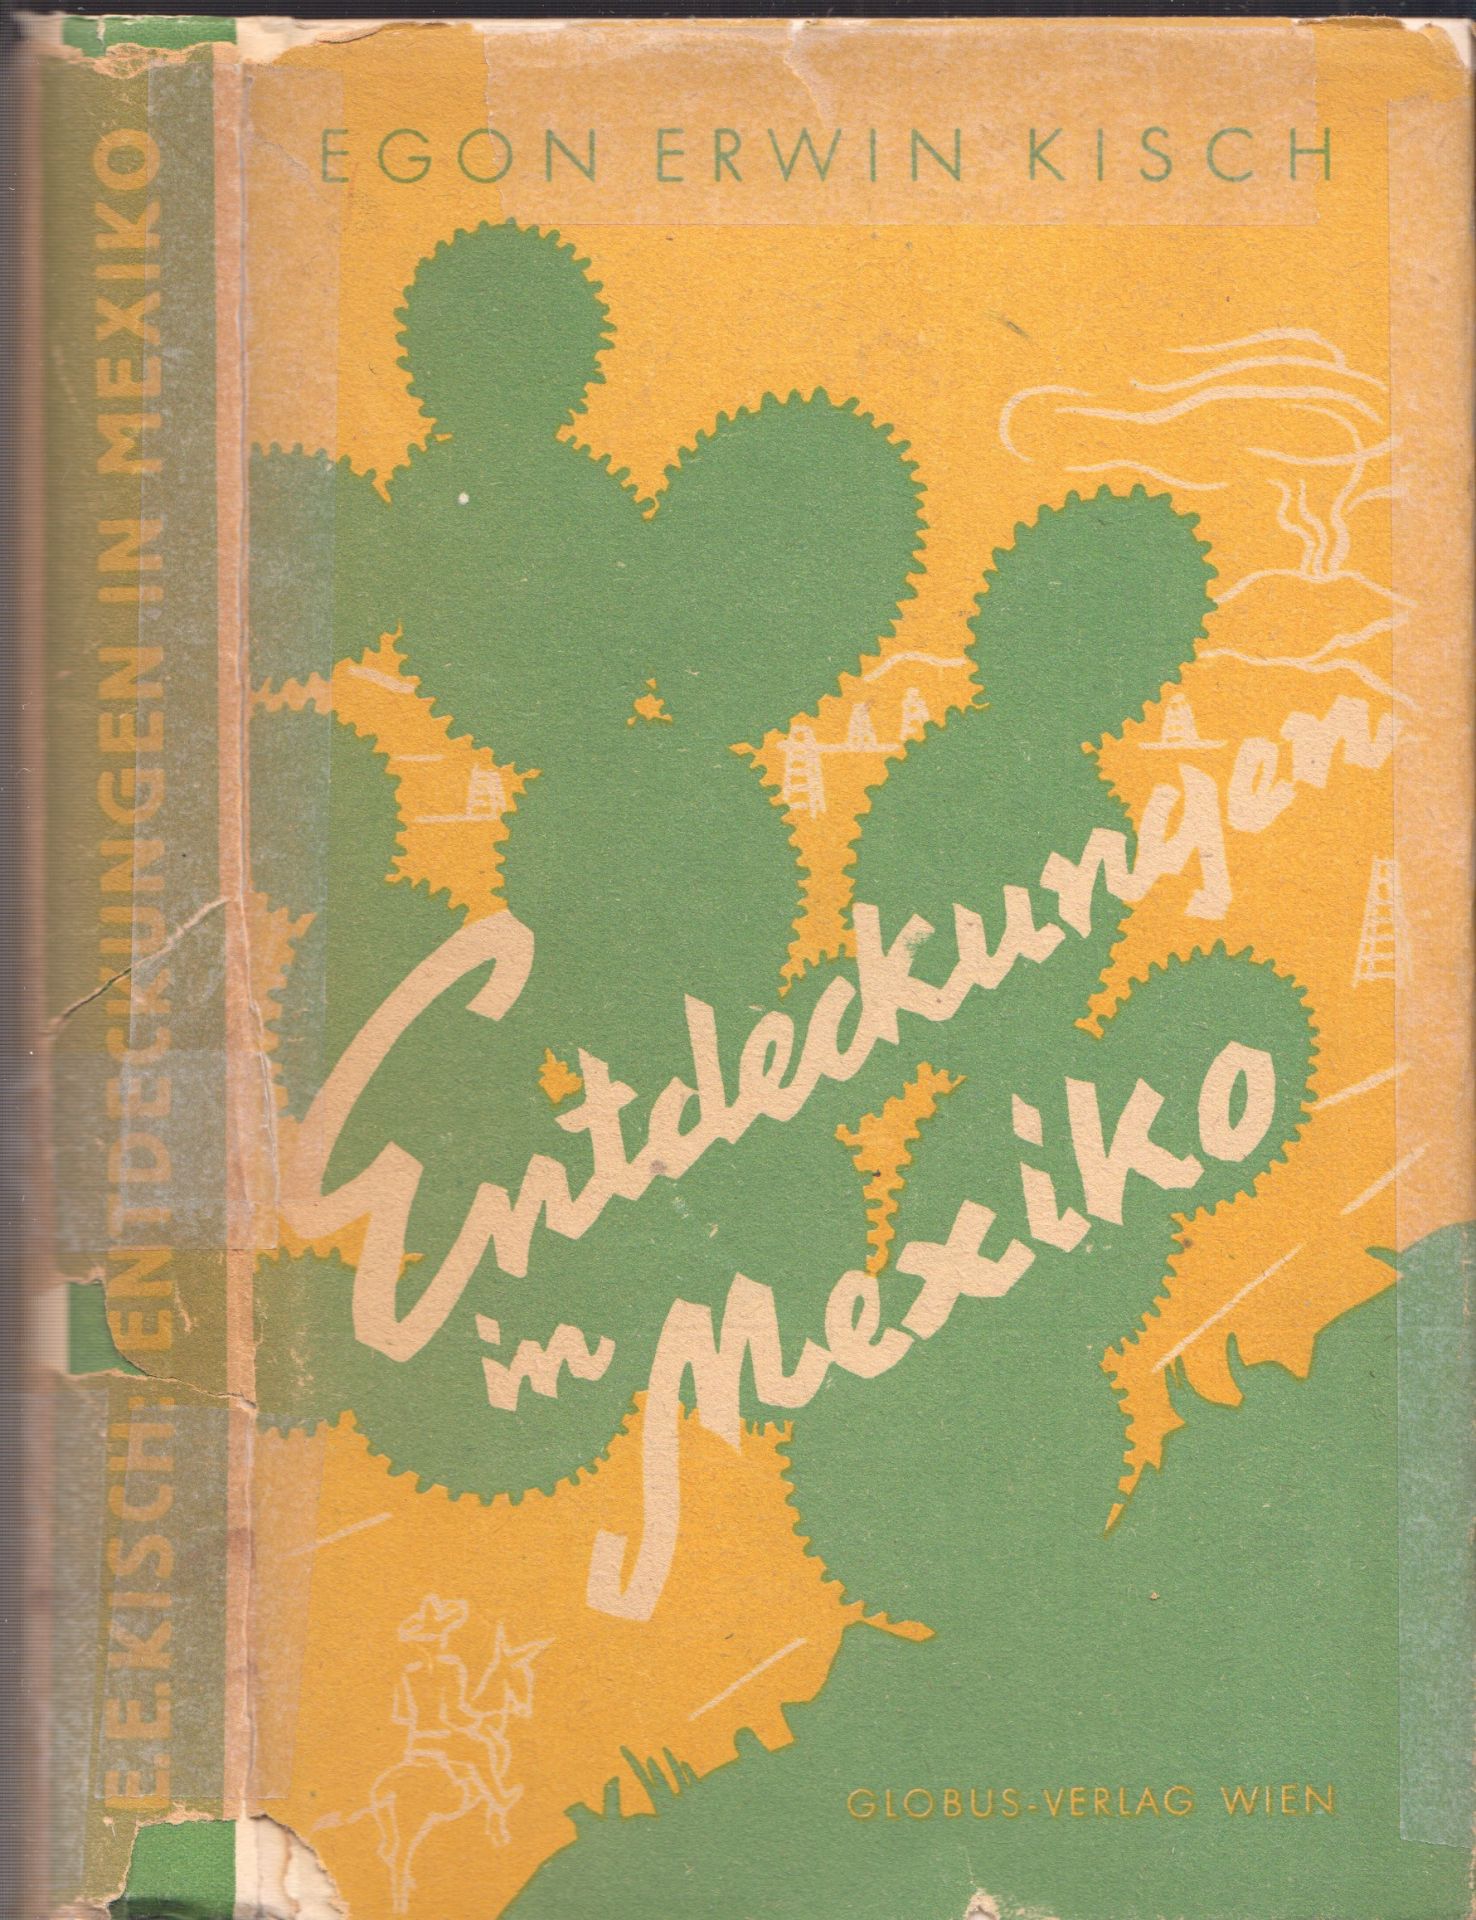 KISCH, Egon Erwin. Entdeckungen in Mexiko.